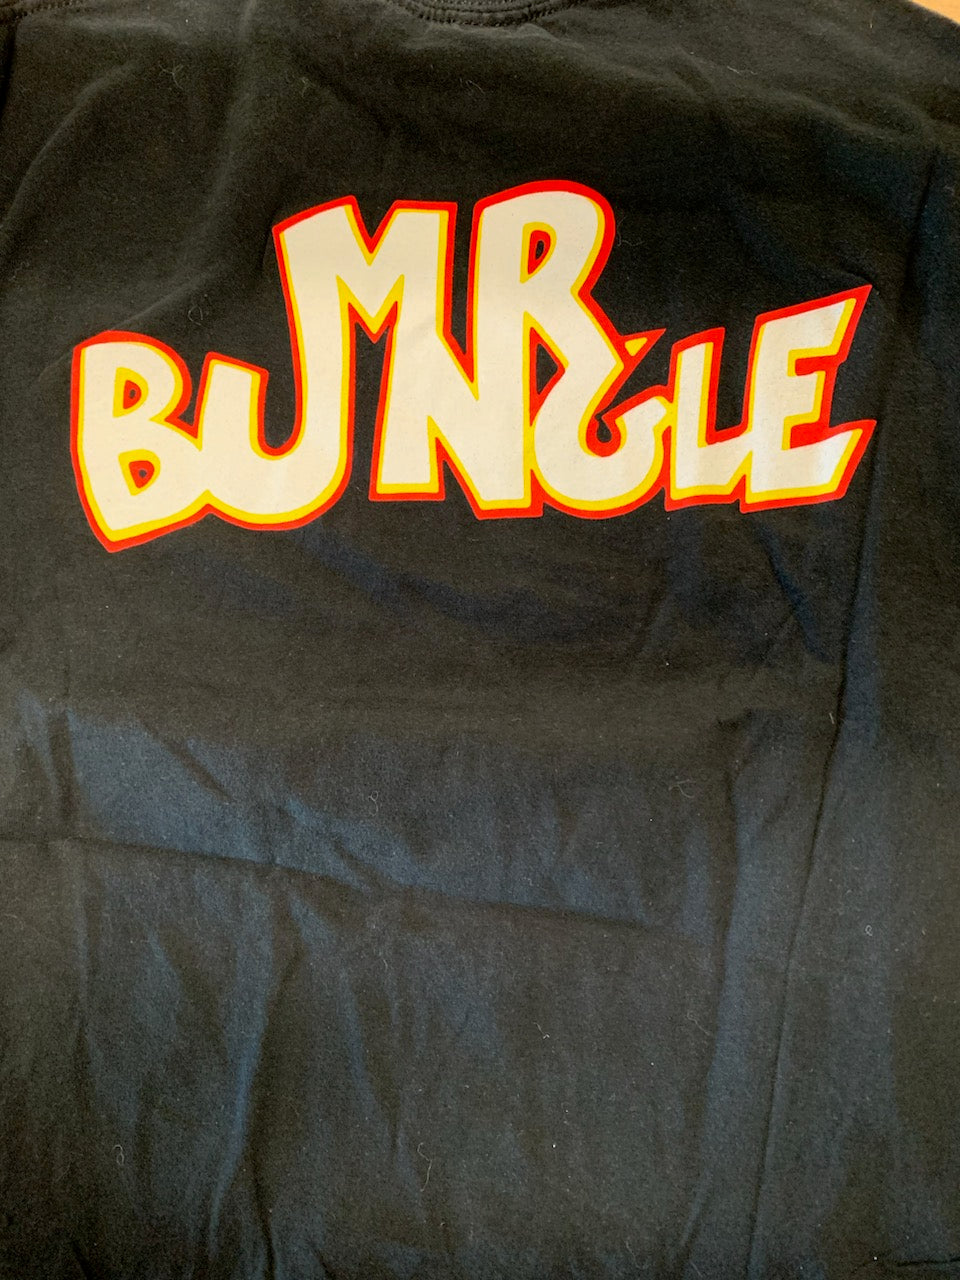 Mr Bungle Diamond Eyes T-Shirt, Black, M